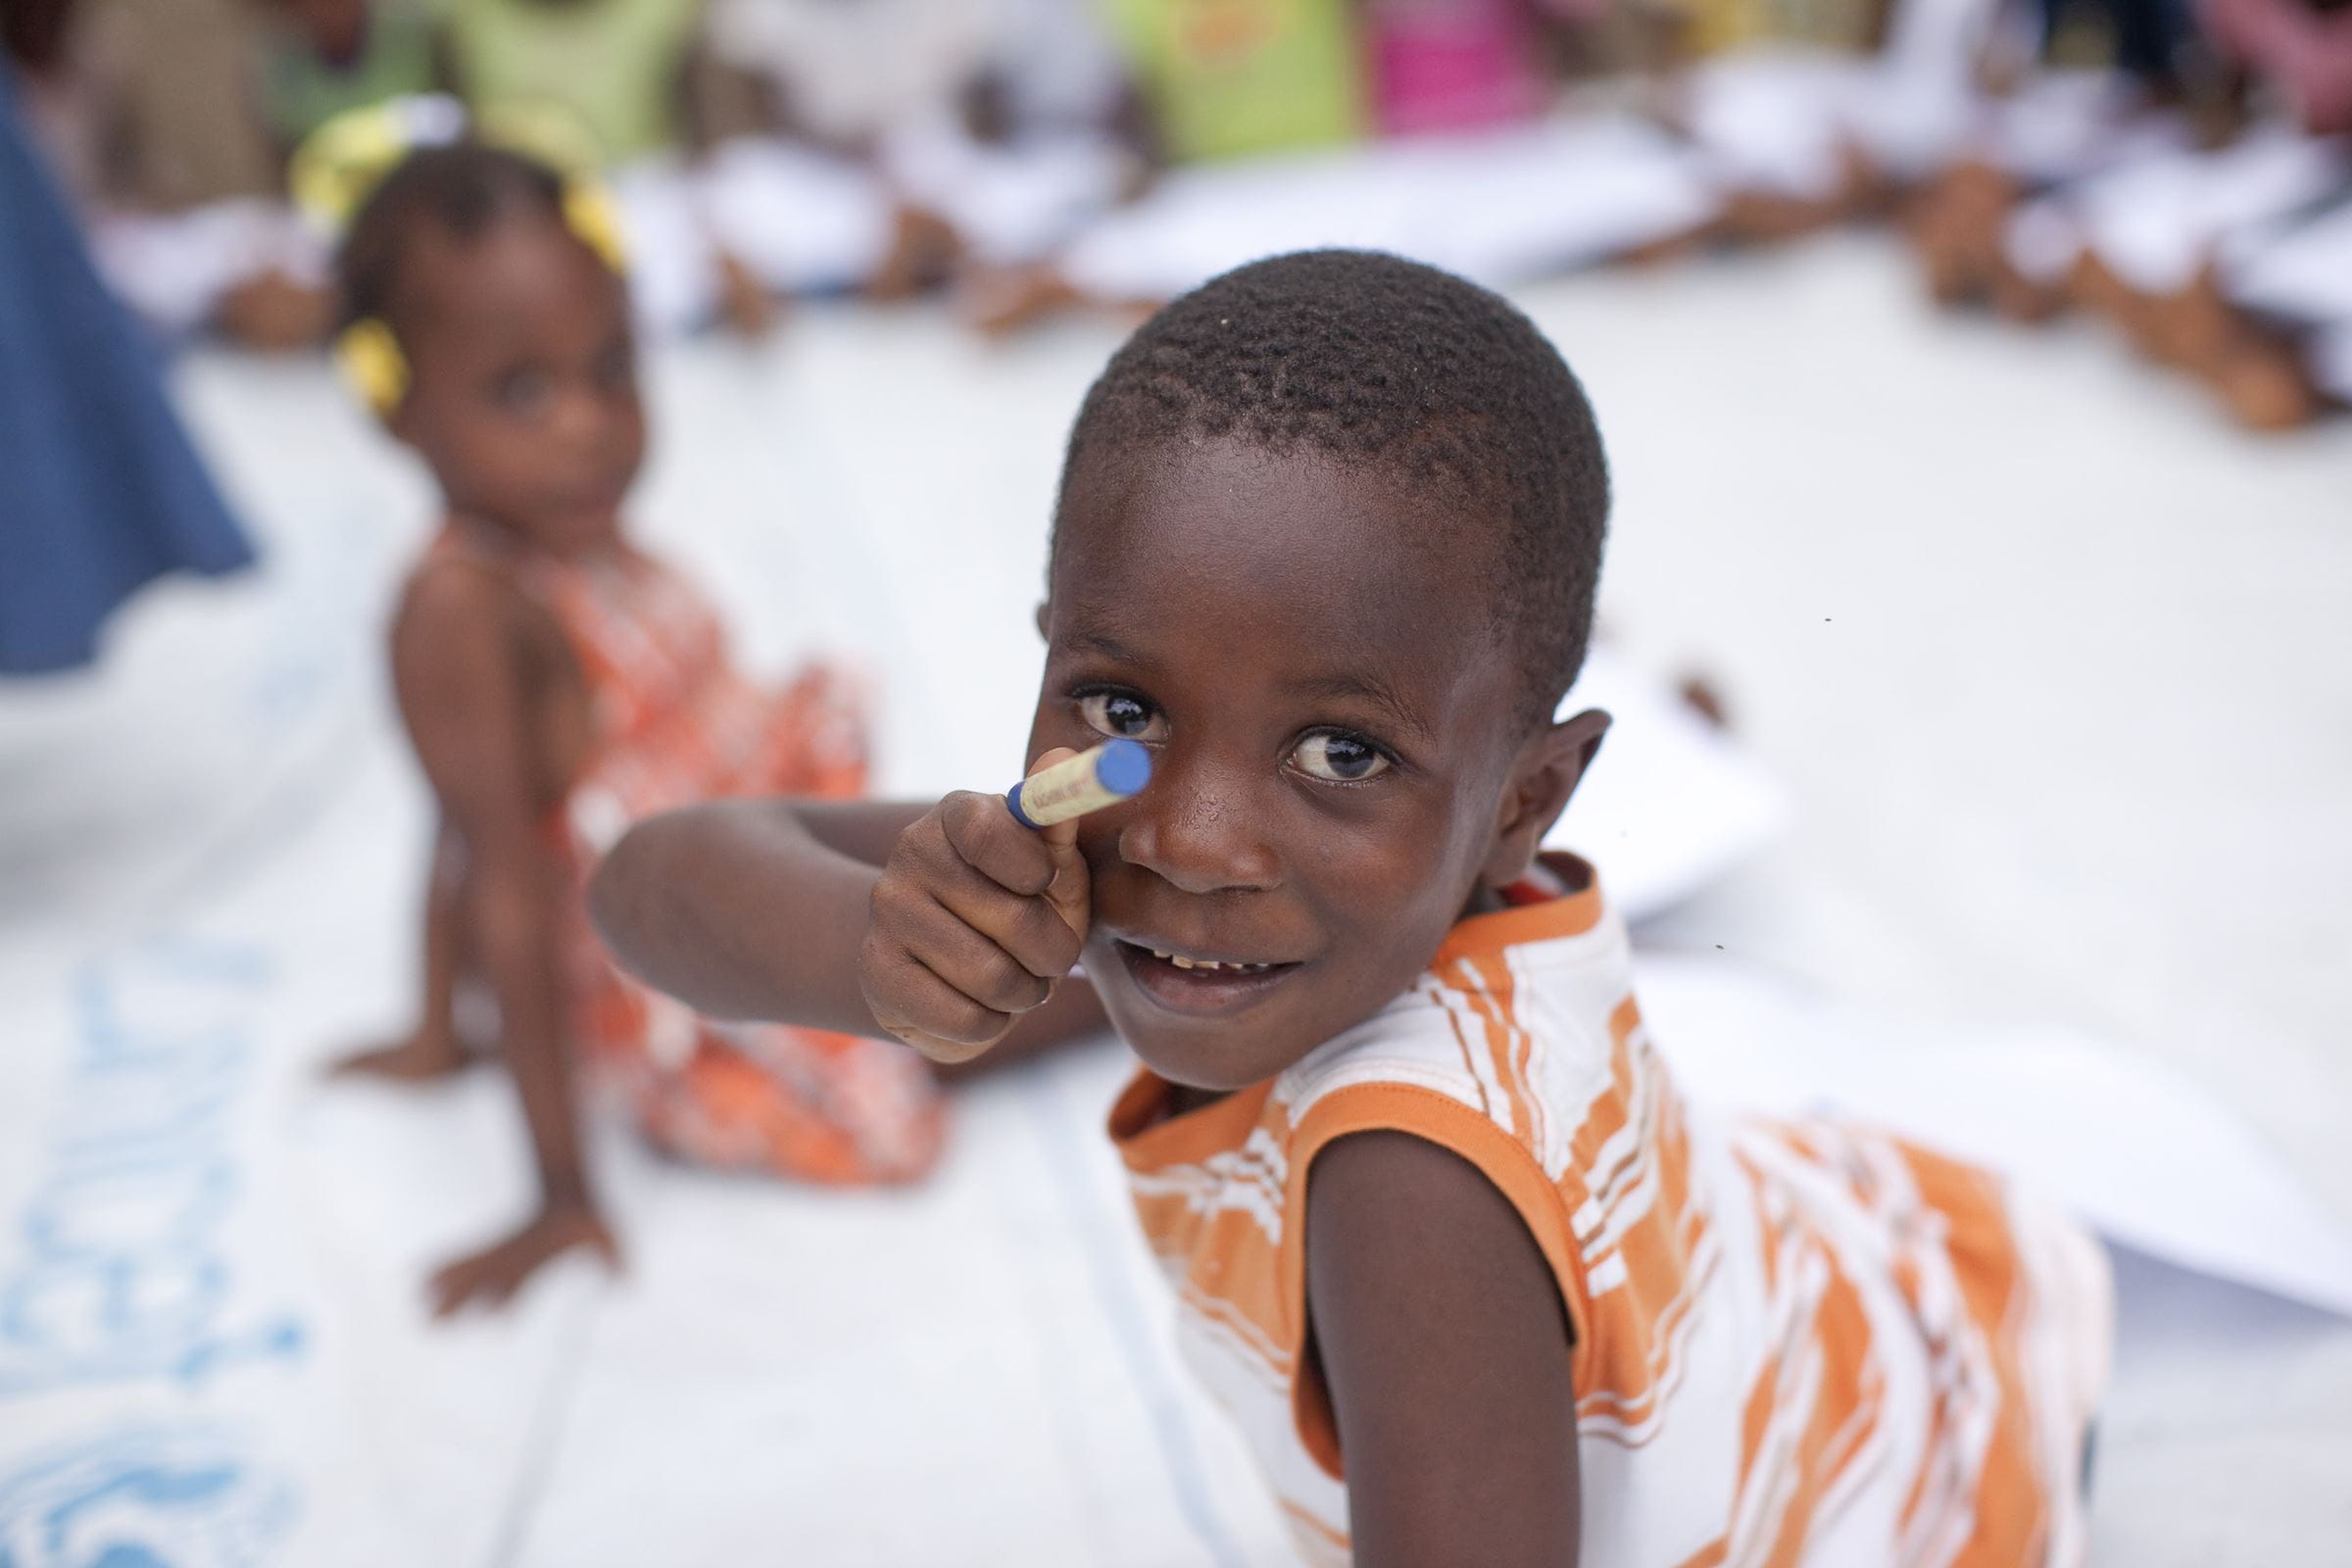 KNH in Haiti - Projekte in Leogane Bilder :KNH Jakob Studnar
Kinder im Projekt Leogane